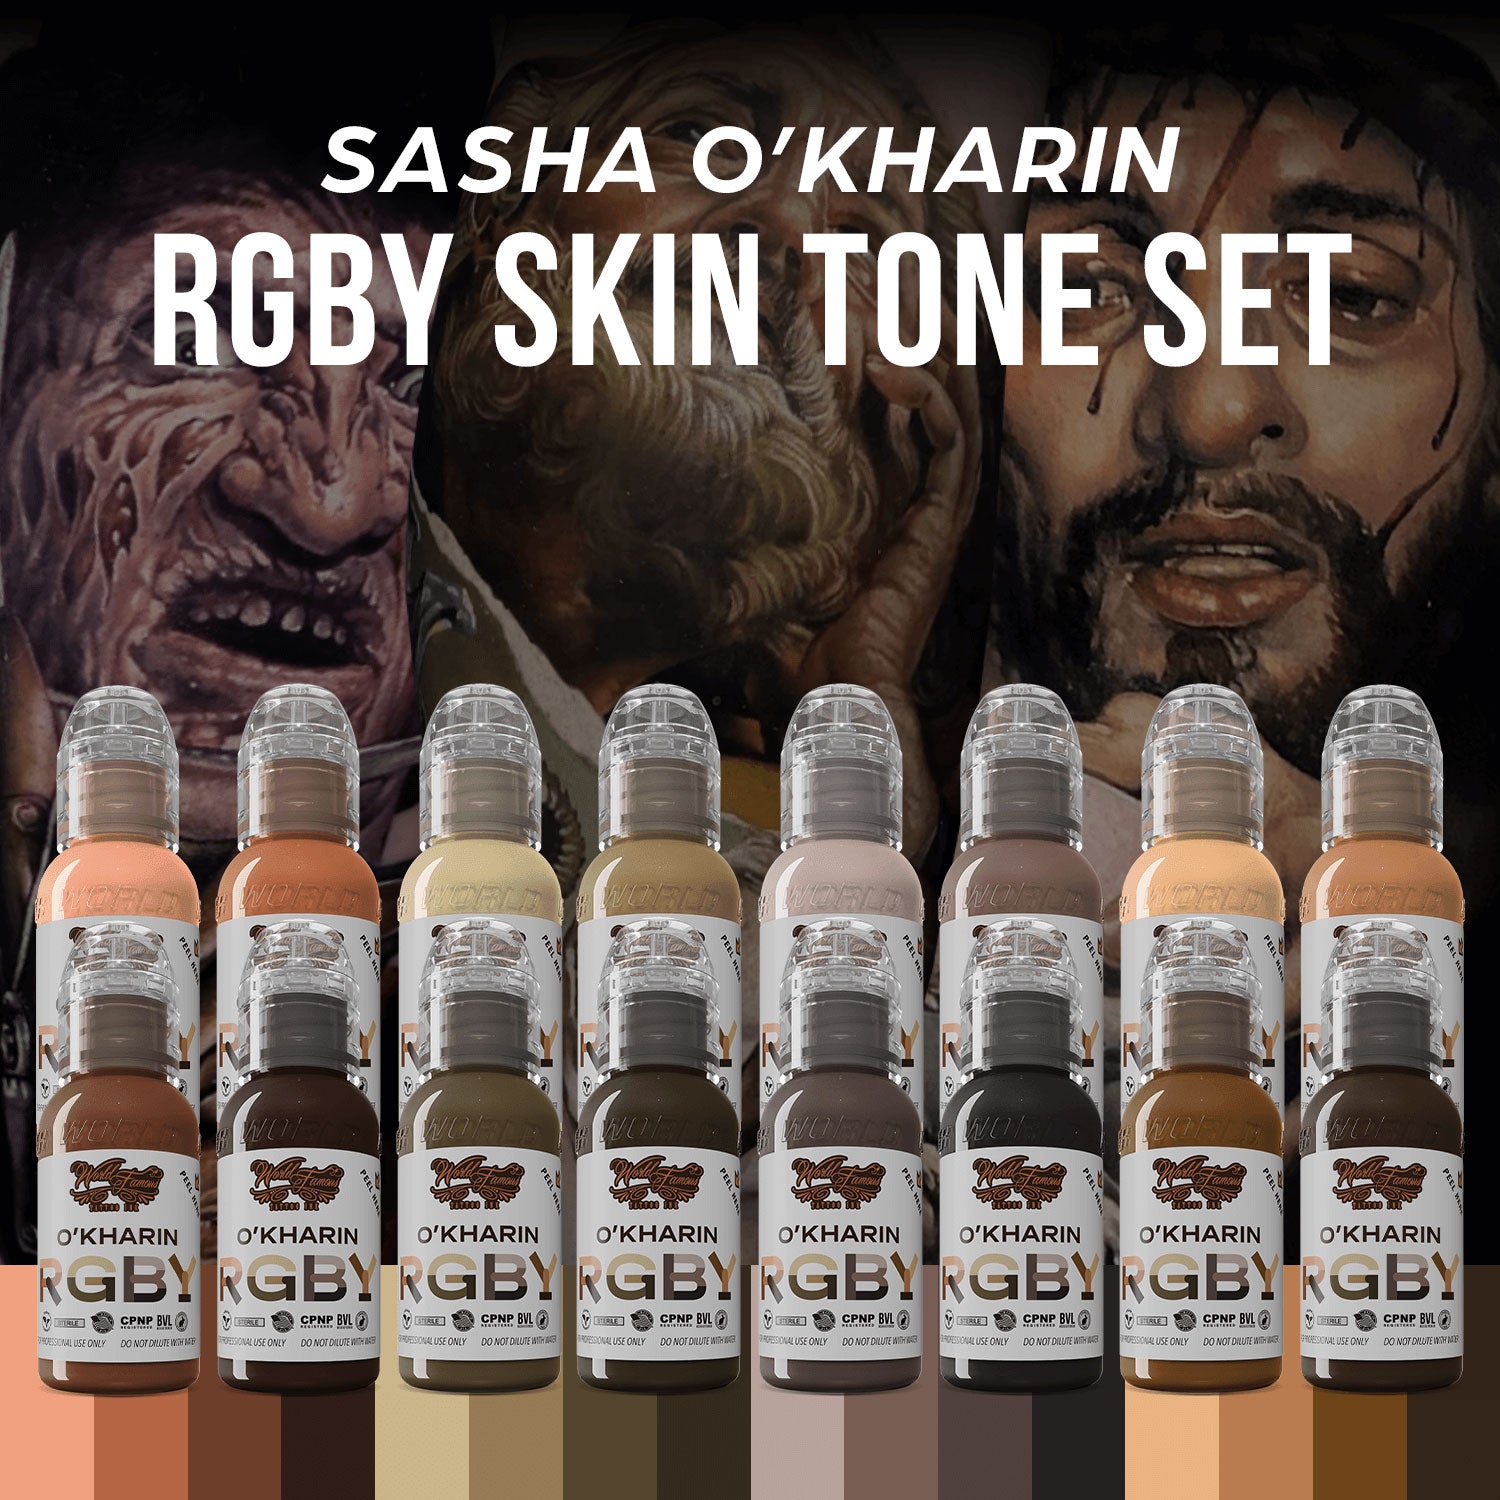 Sasha O'Kharin RGBY Skintone Set